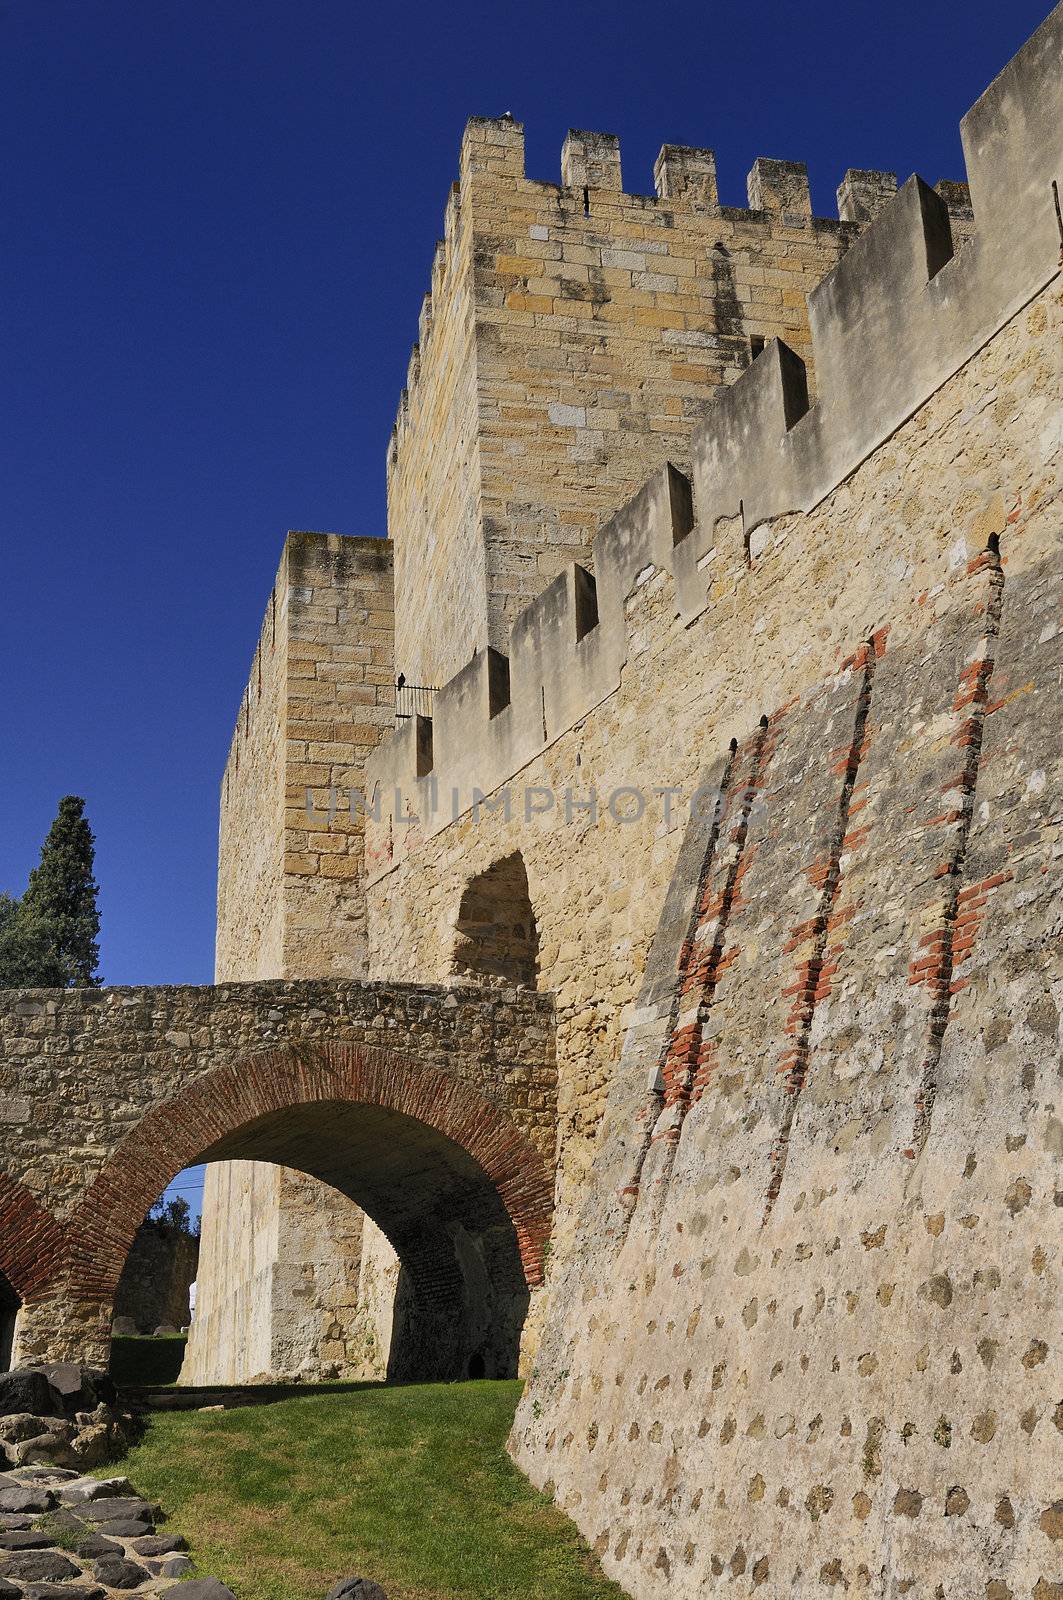 Sao jorge medieval scastel in Lisbonne, Portugal